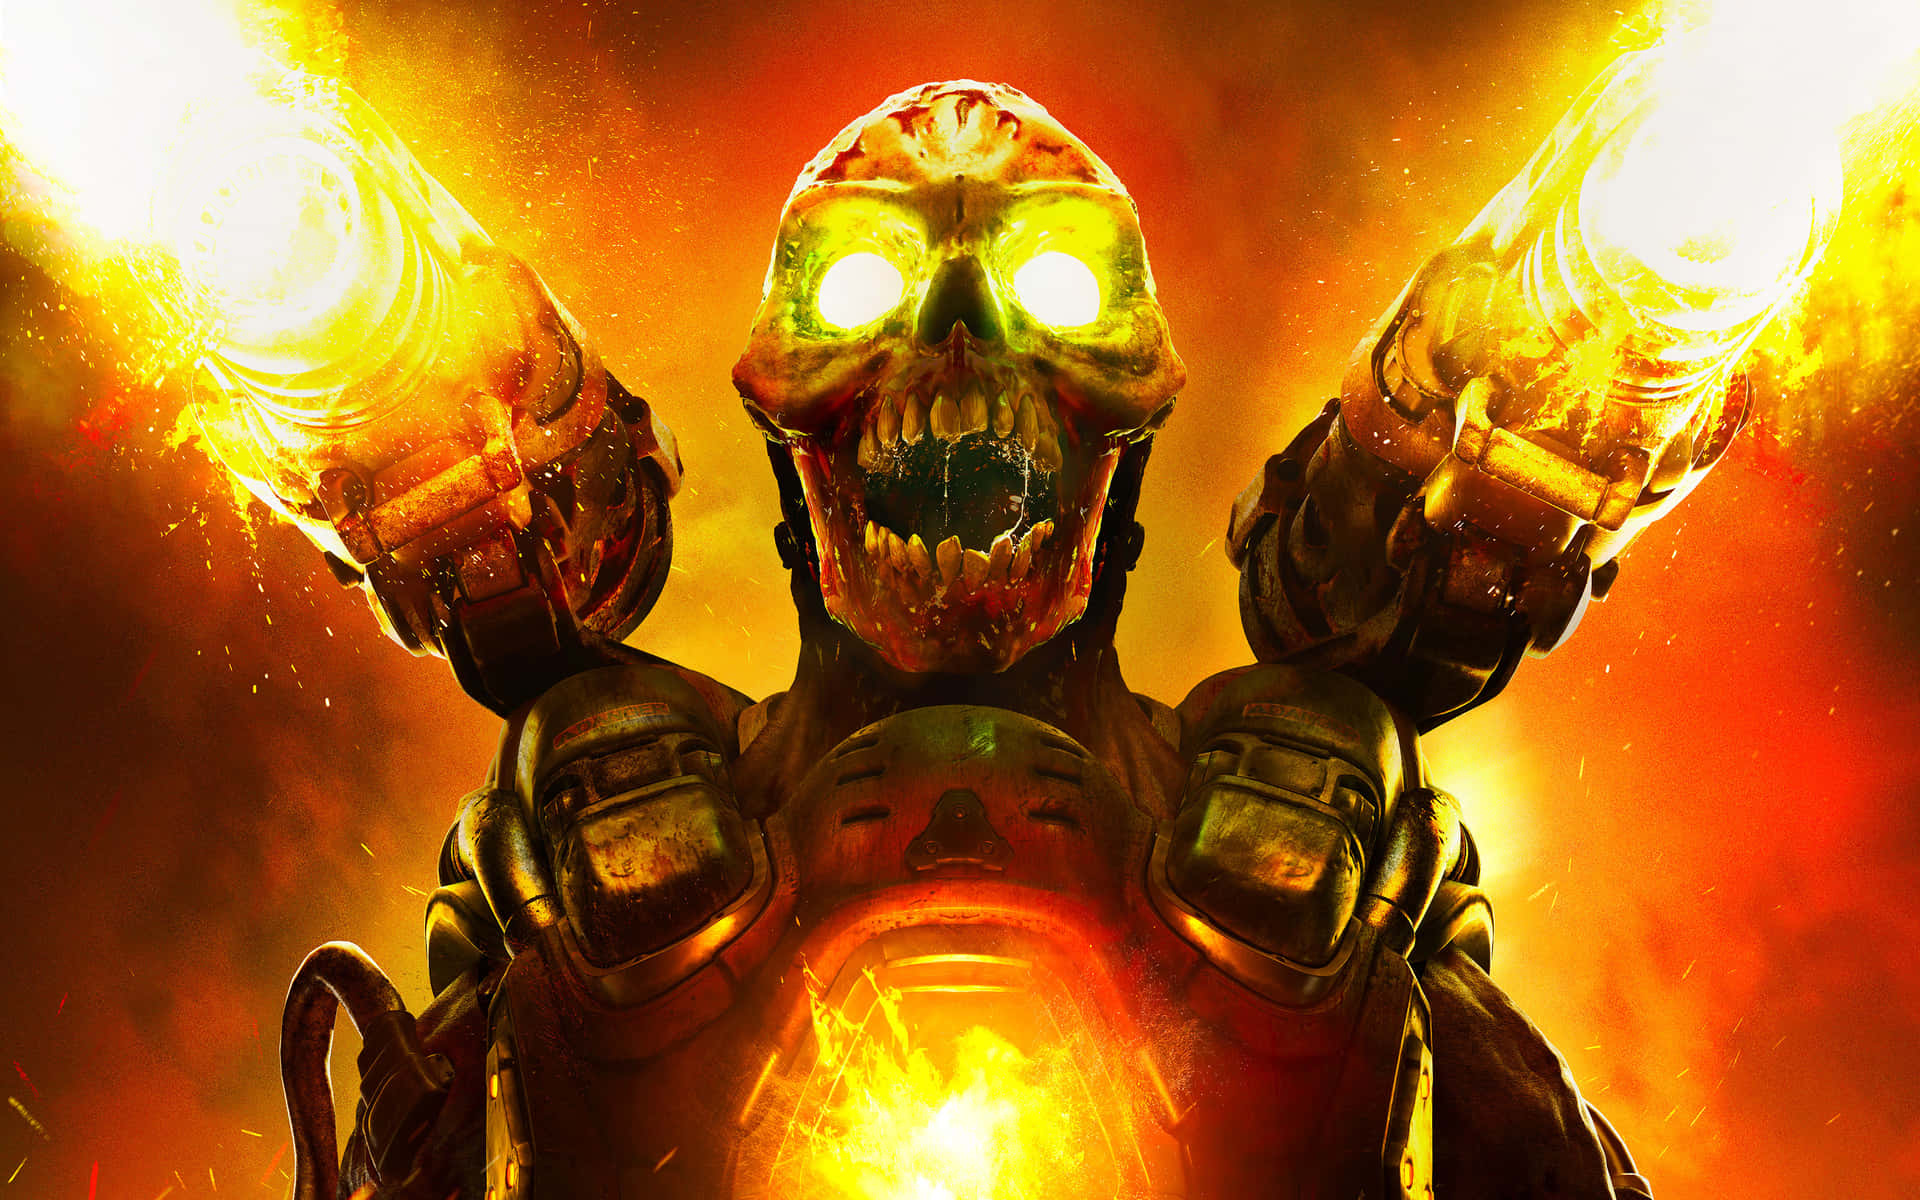 "Battle like never before with Doom 2016" Wallpaper